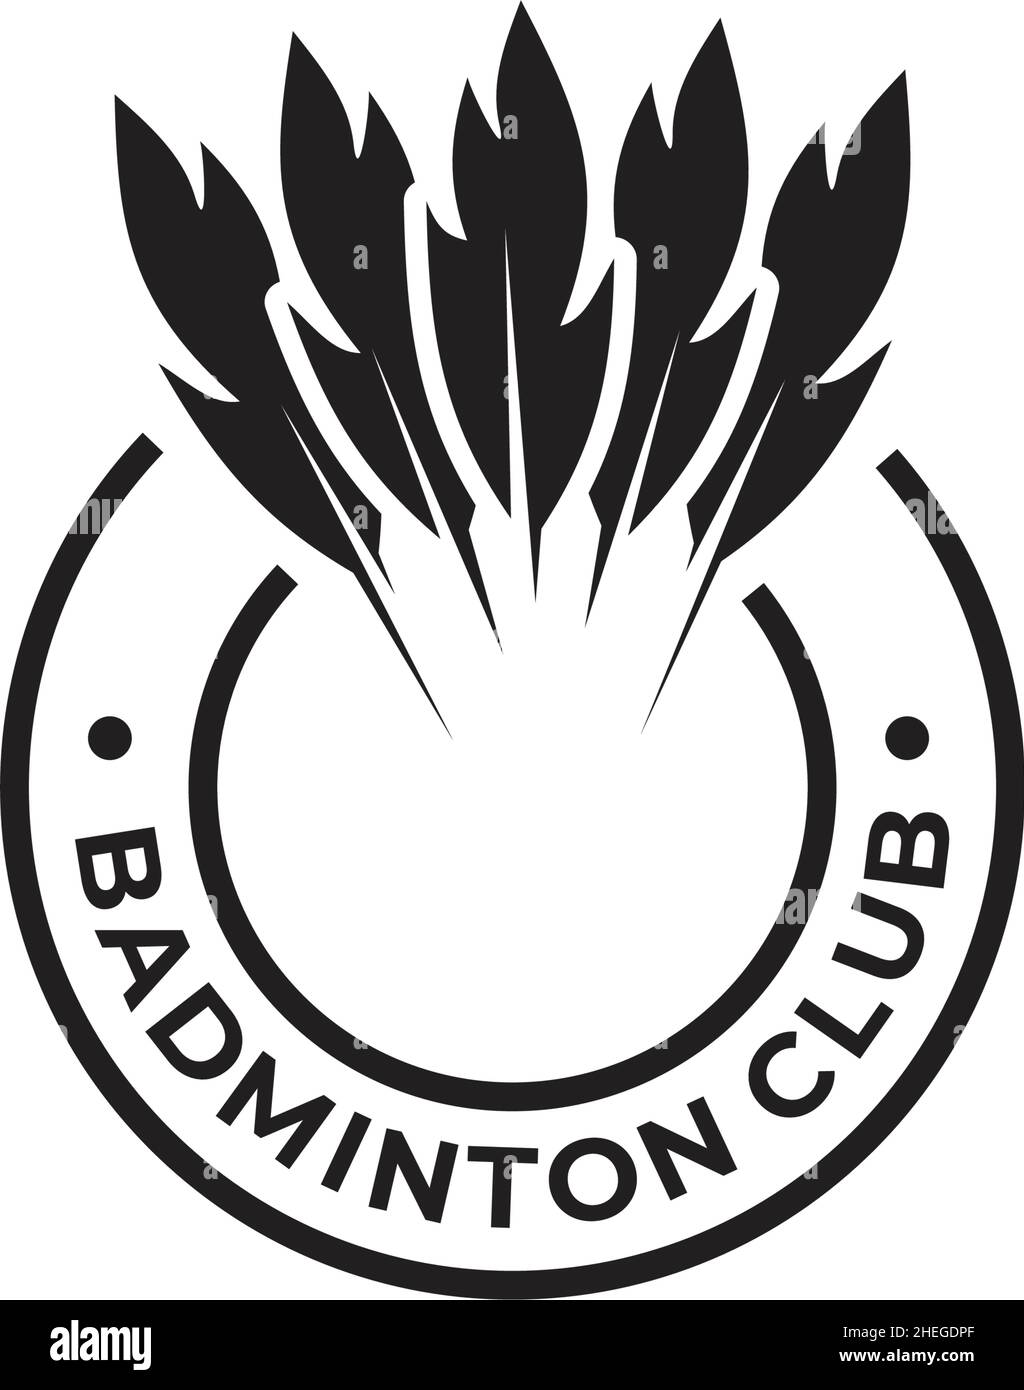 Badminton club -Fotos und -Bildmaterial in hoher Auflösung – Alamy